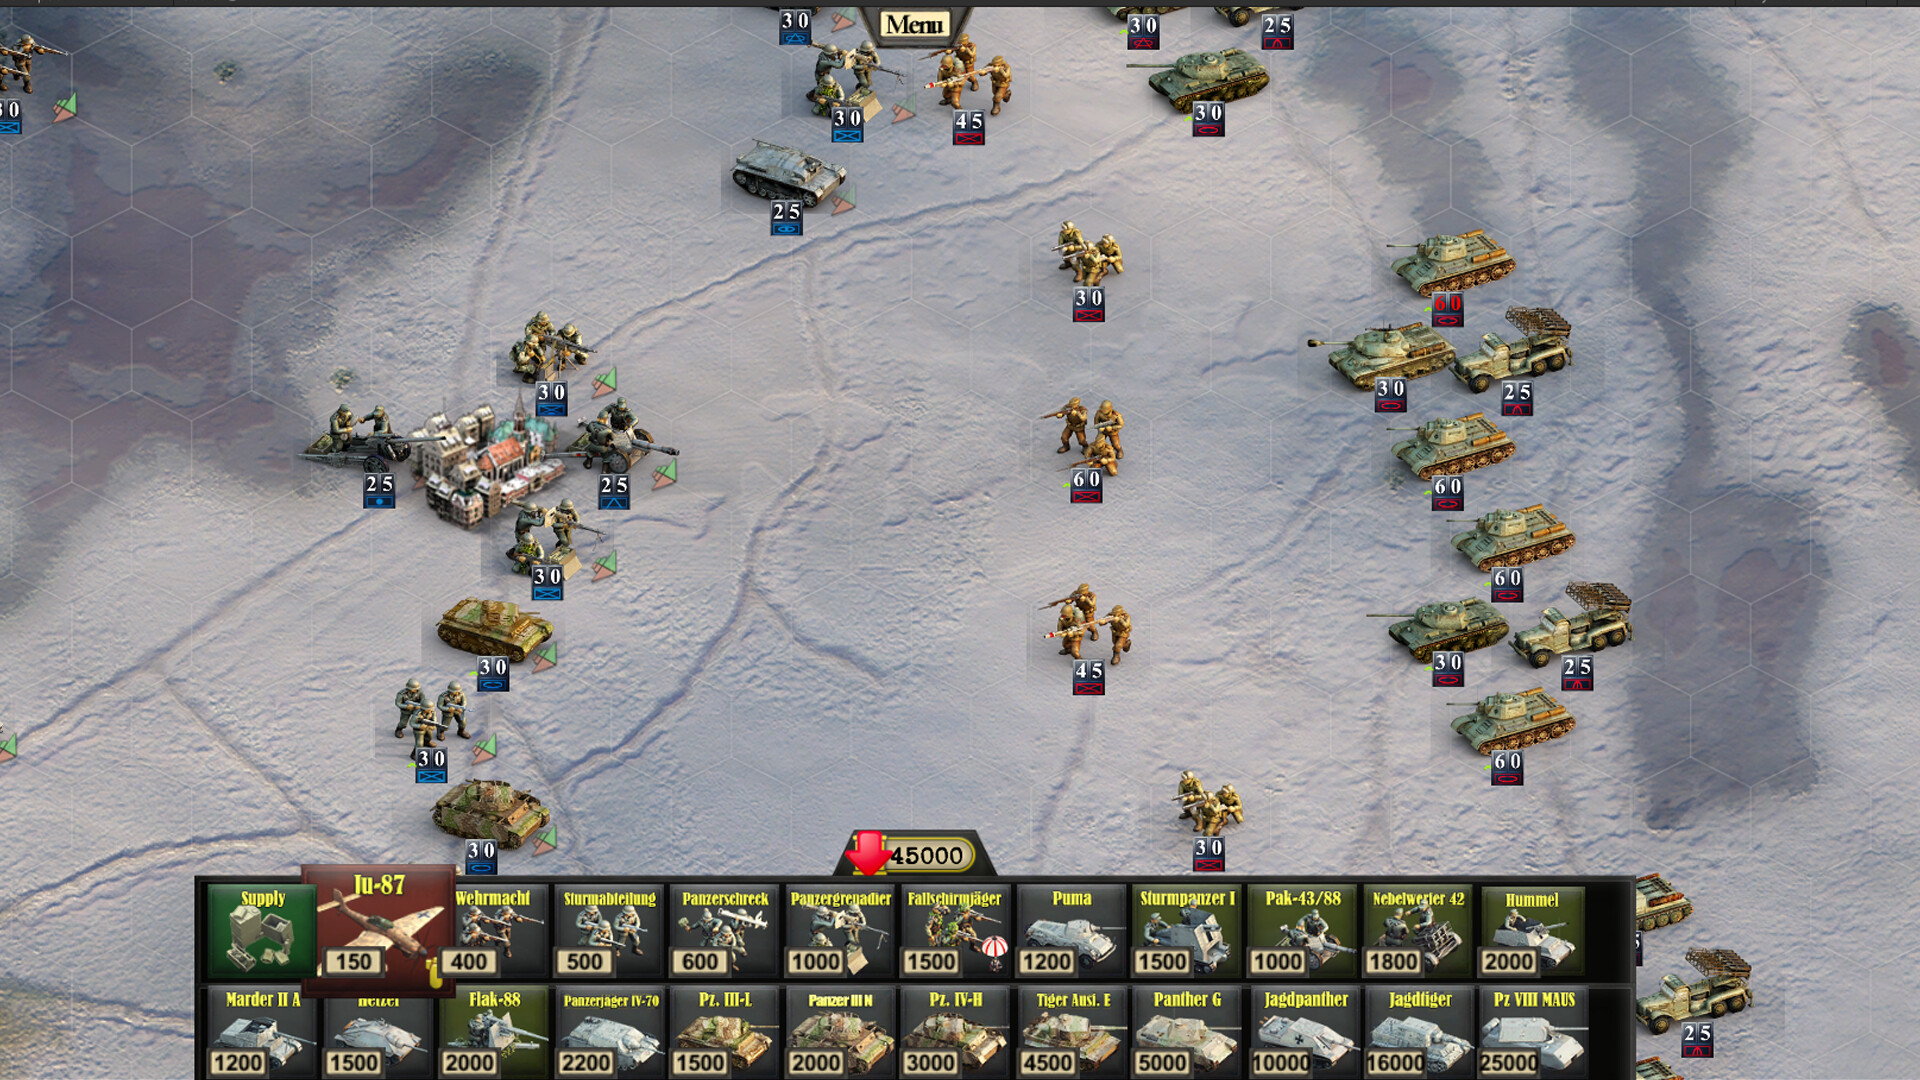 Frontline: Panzers & Generals Vol. I Steam CD Key